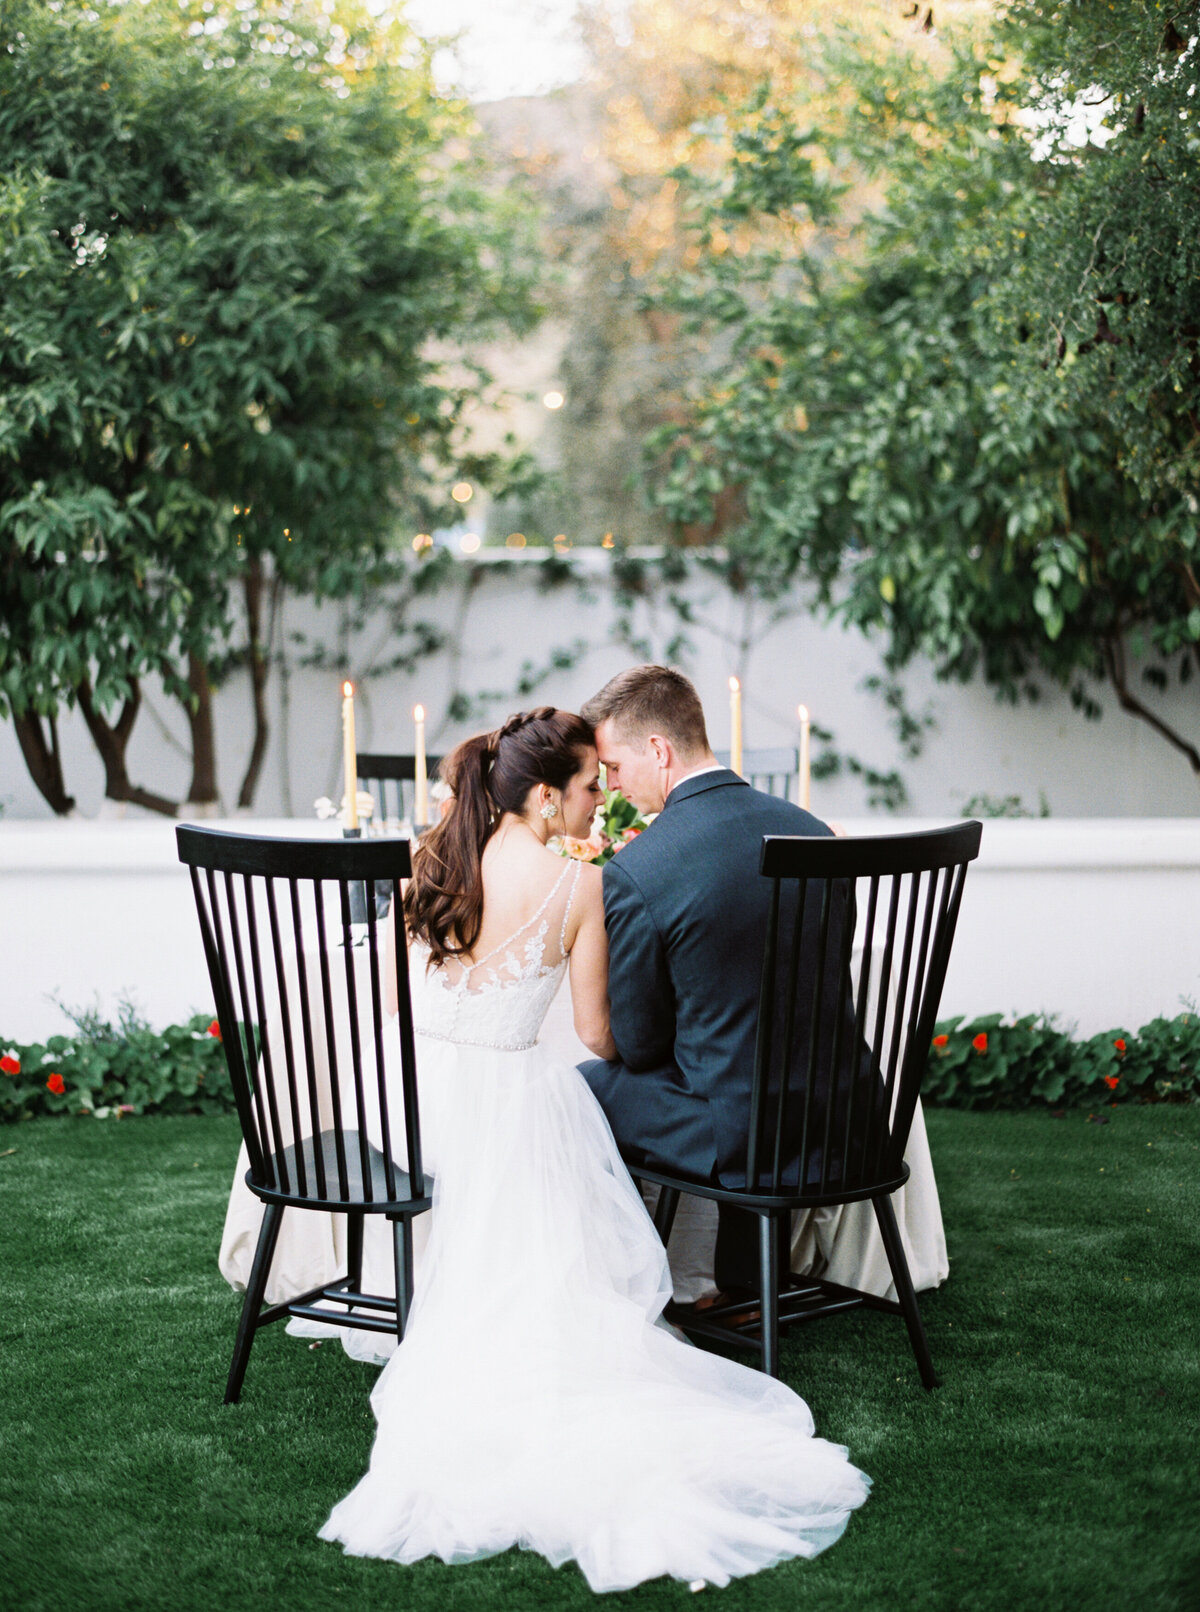 Garden Romance | El Chorro, Paradise Valley, Arizona | Mary Claire Photography | Arizona & Destination Fine Art Wedding Photographer